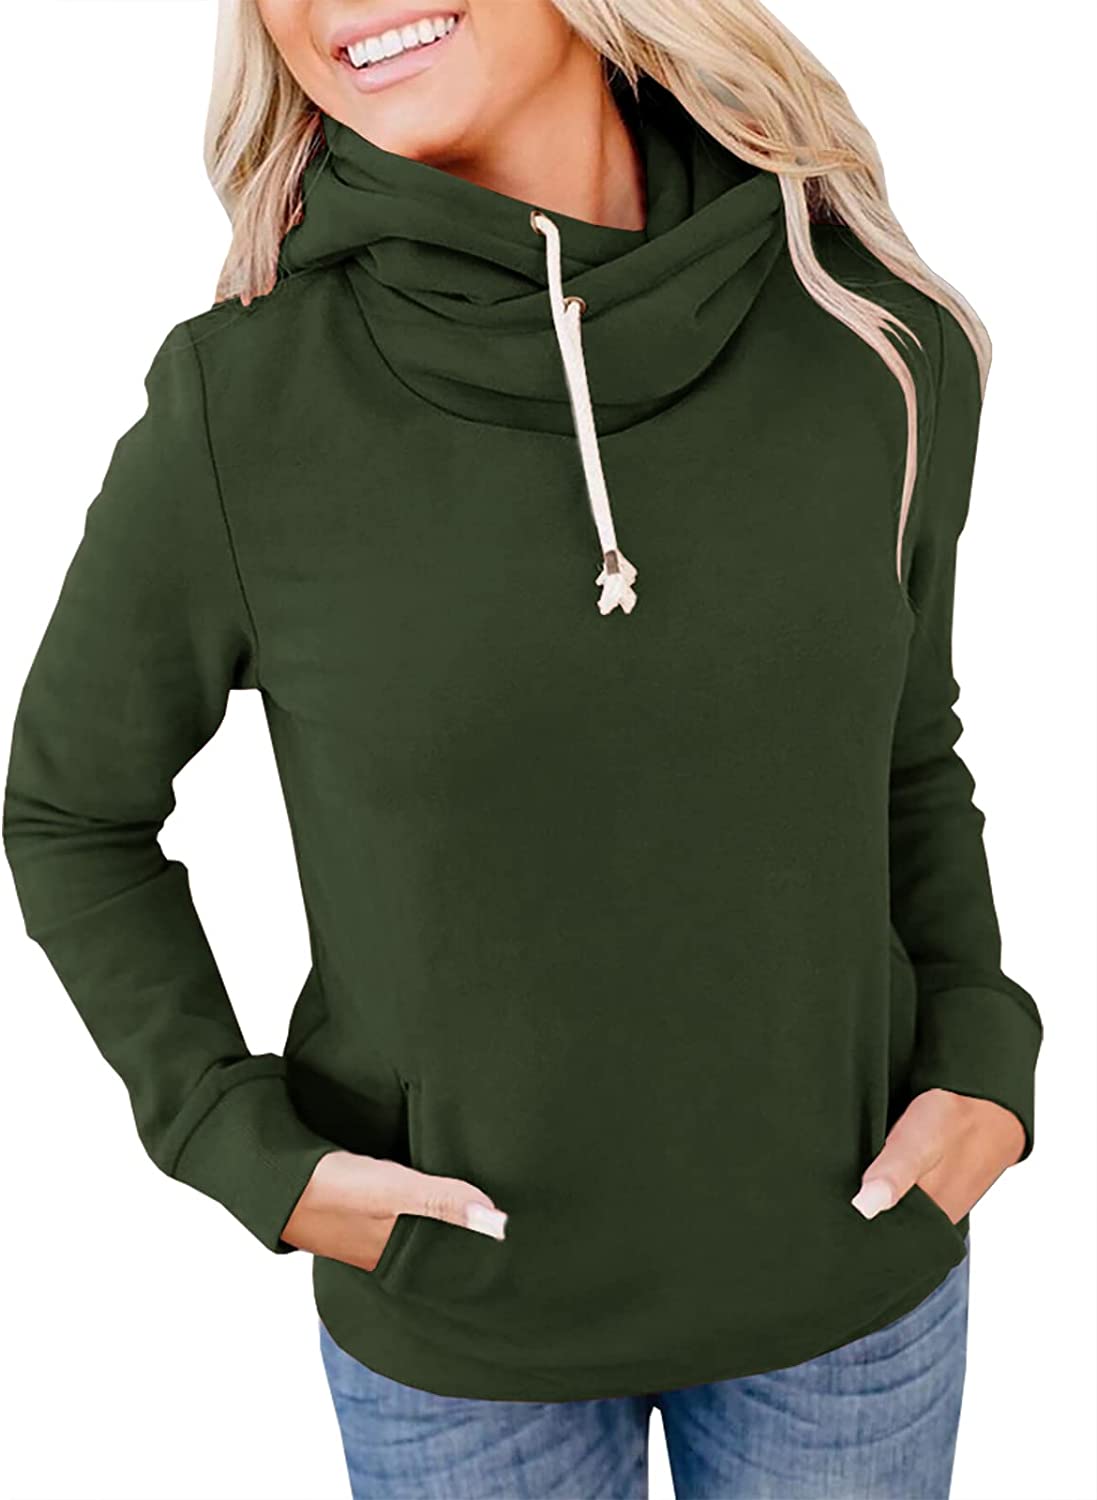 ✦HebeTop✦ Womens Casual Hoodies Long Sleeve Sweatshirts Cowl Neck Drawstring Hooded Pullover Top 